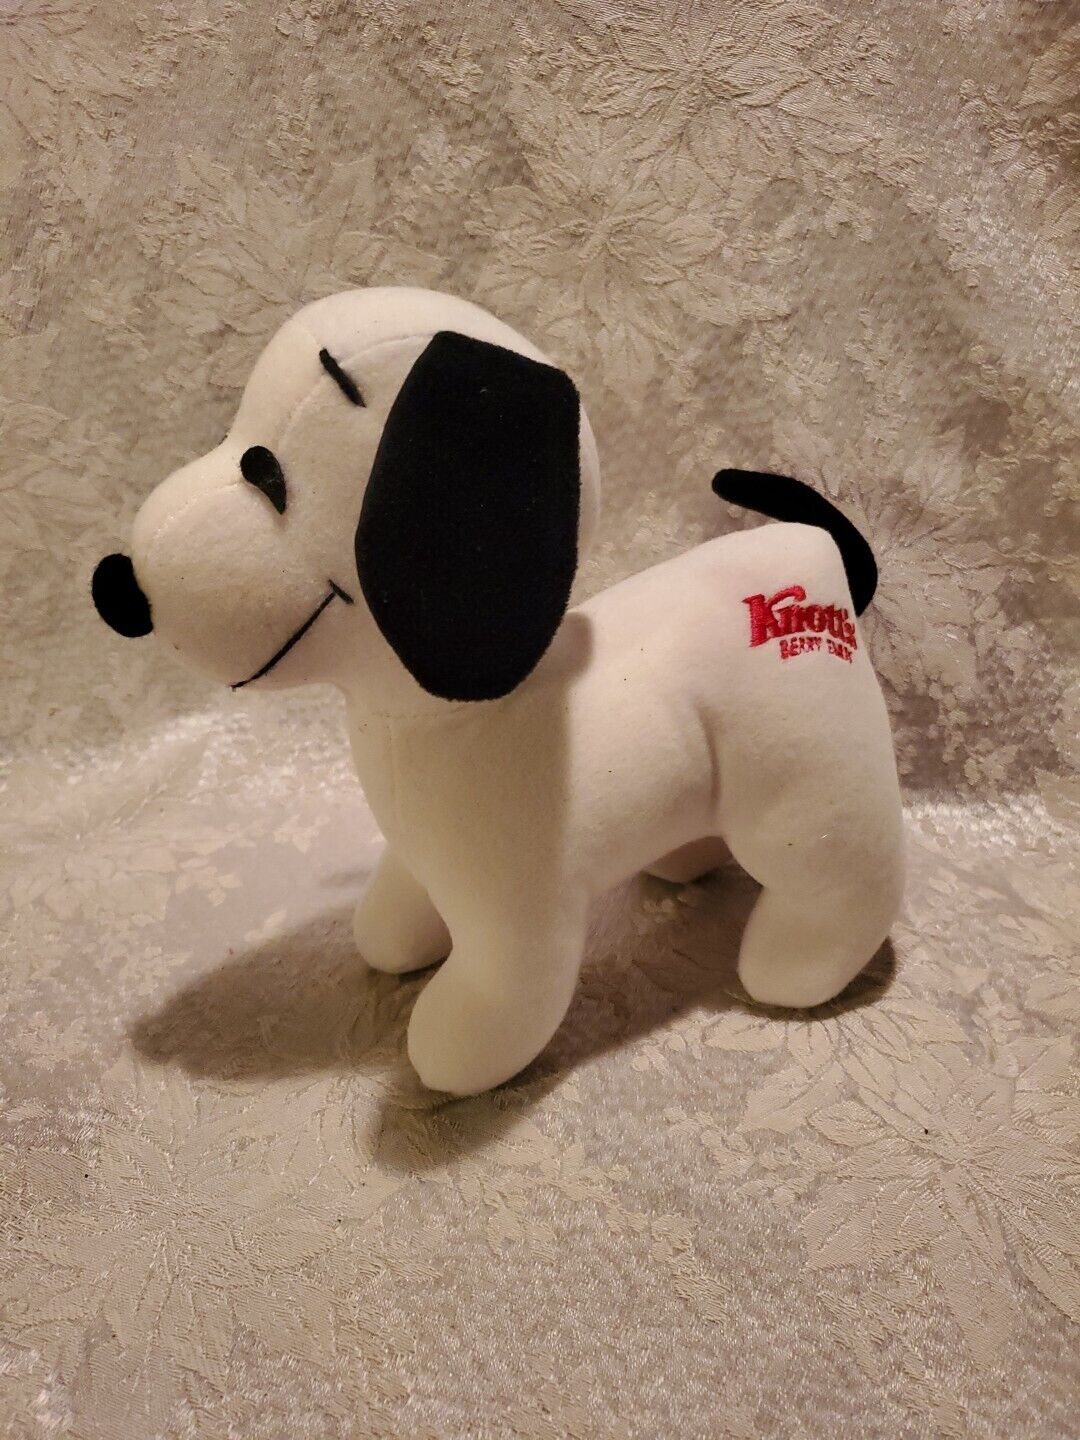 VERY RARE Snoopy 1968 Knotts Berry Farm Stuffed Plush Toy